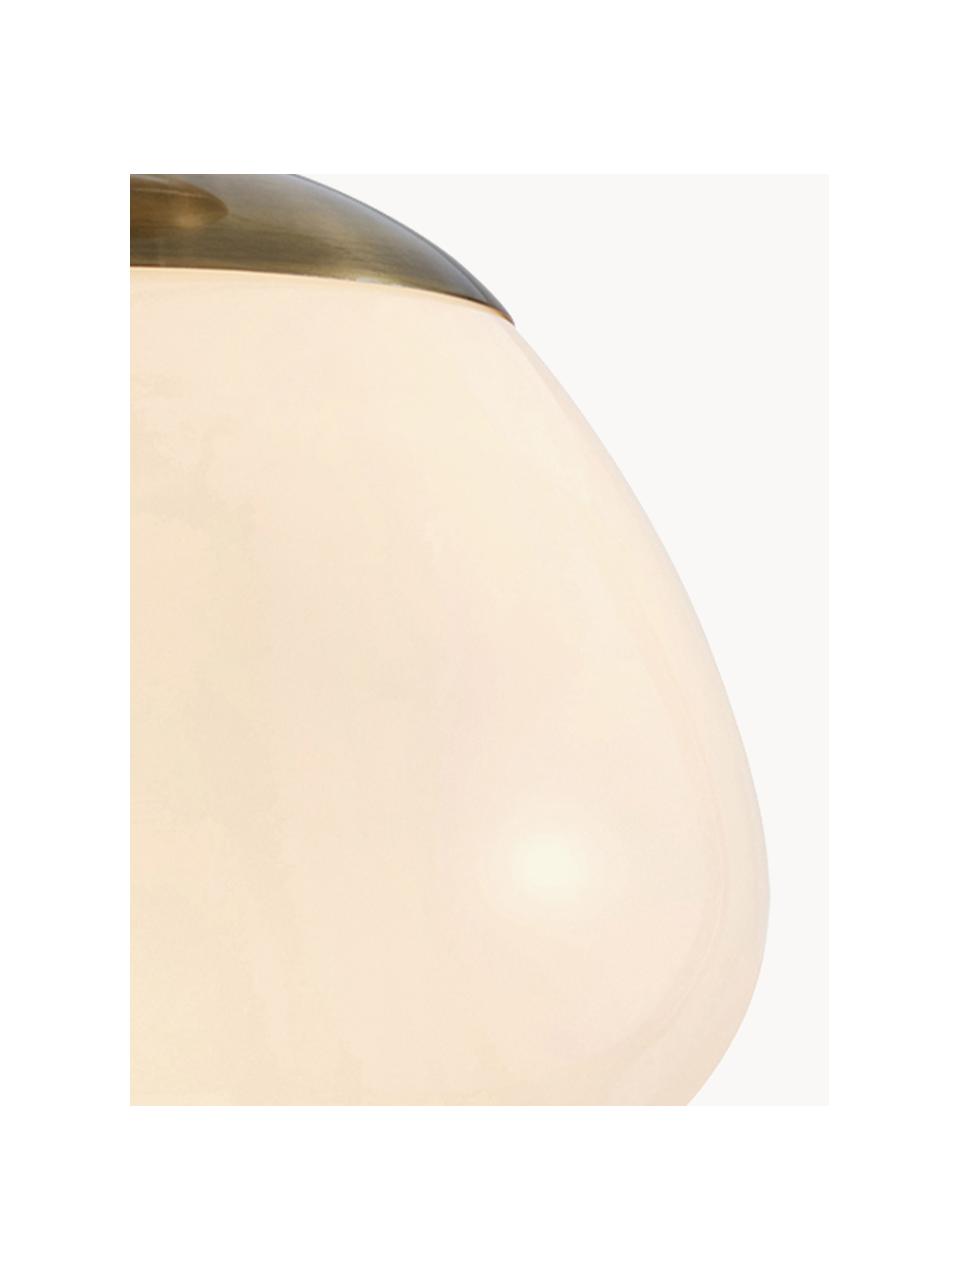 Plafondlamp Rise, Lampenkap: glas, Crèmewit, goudkleurig, Ø 25 x H 35 cm